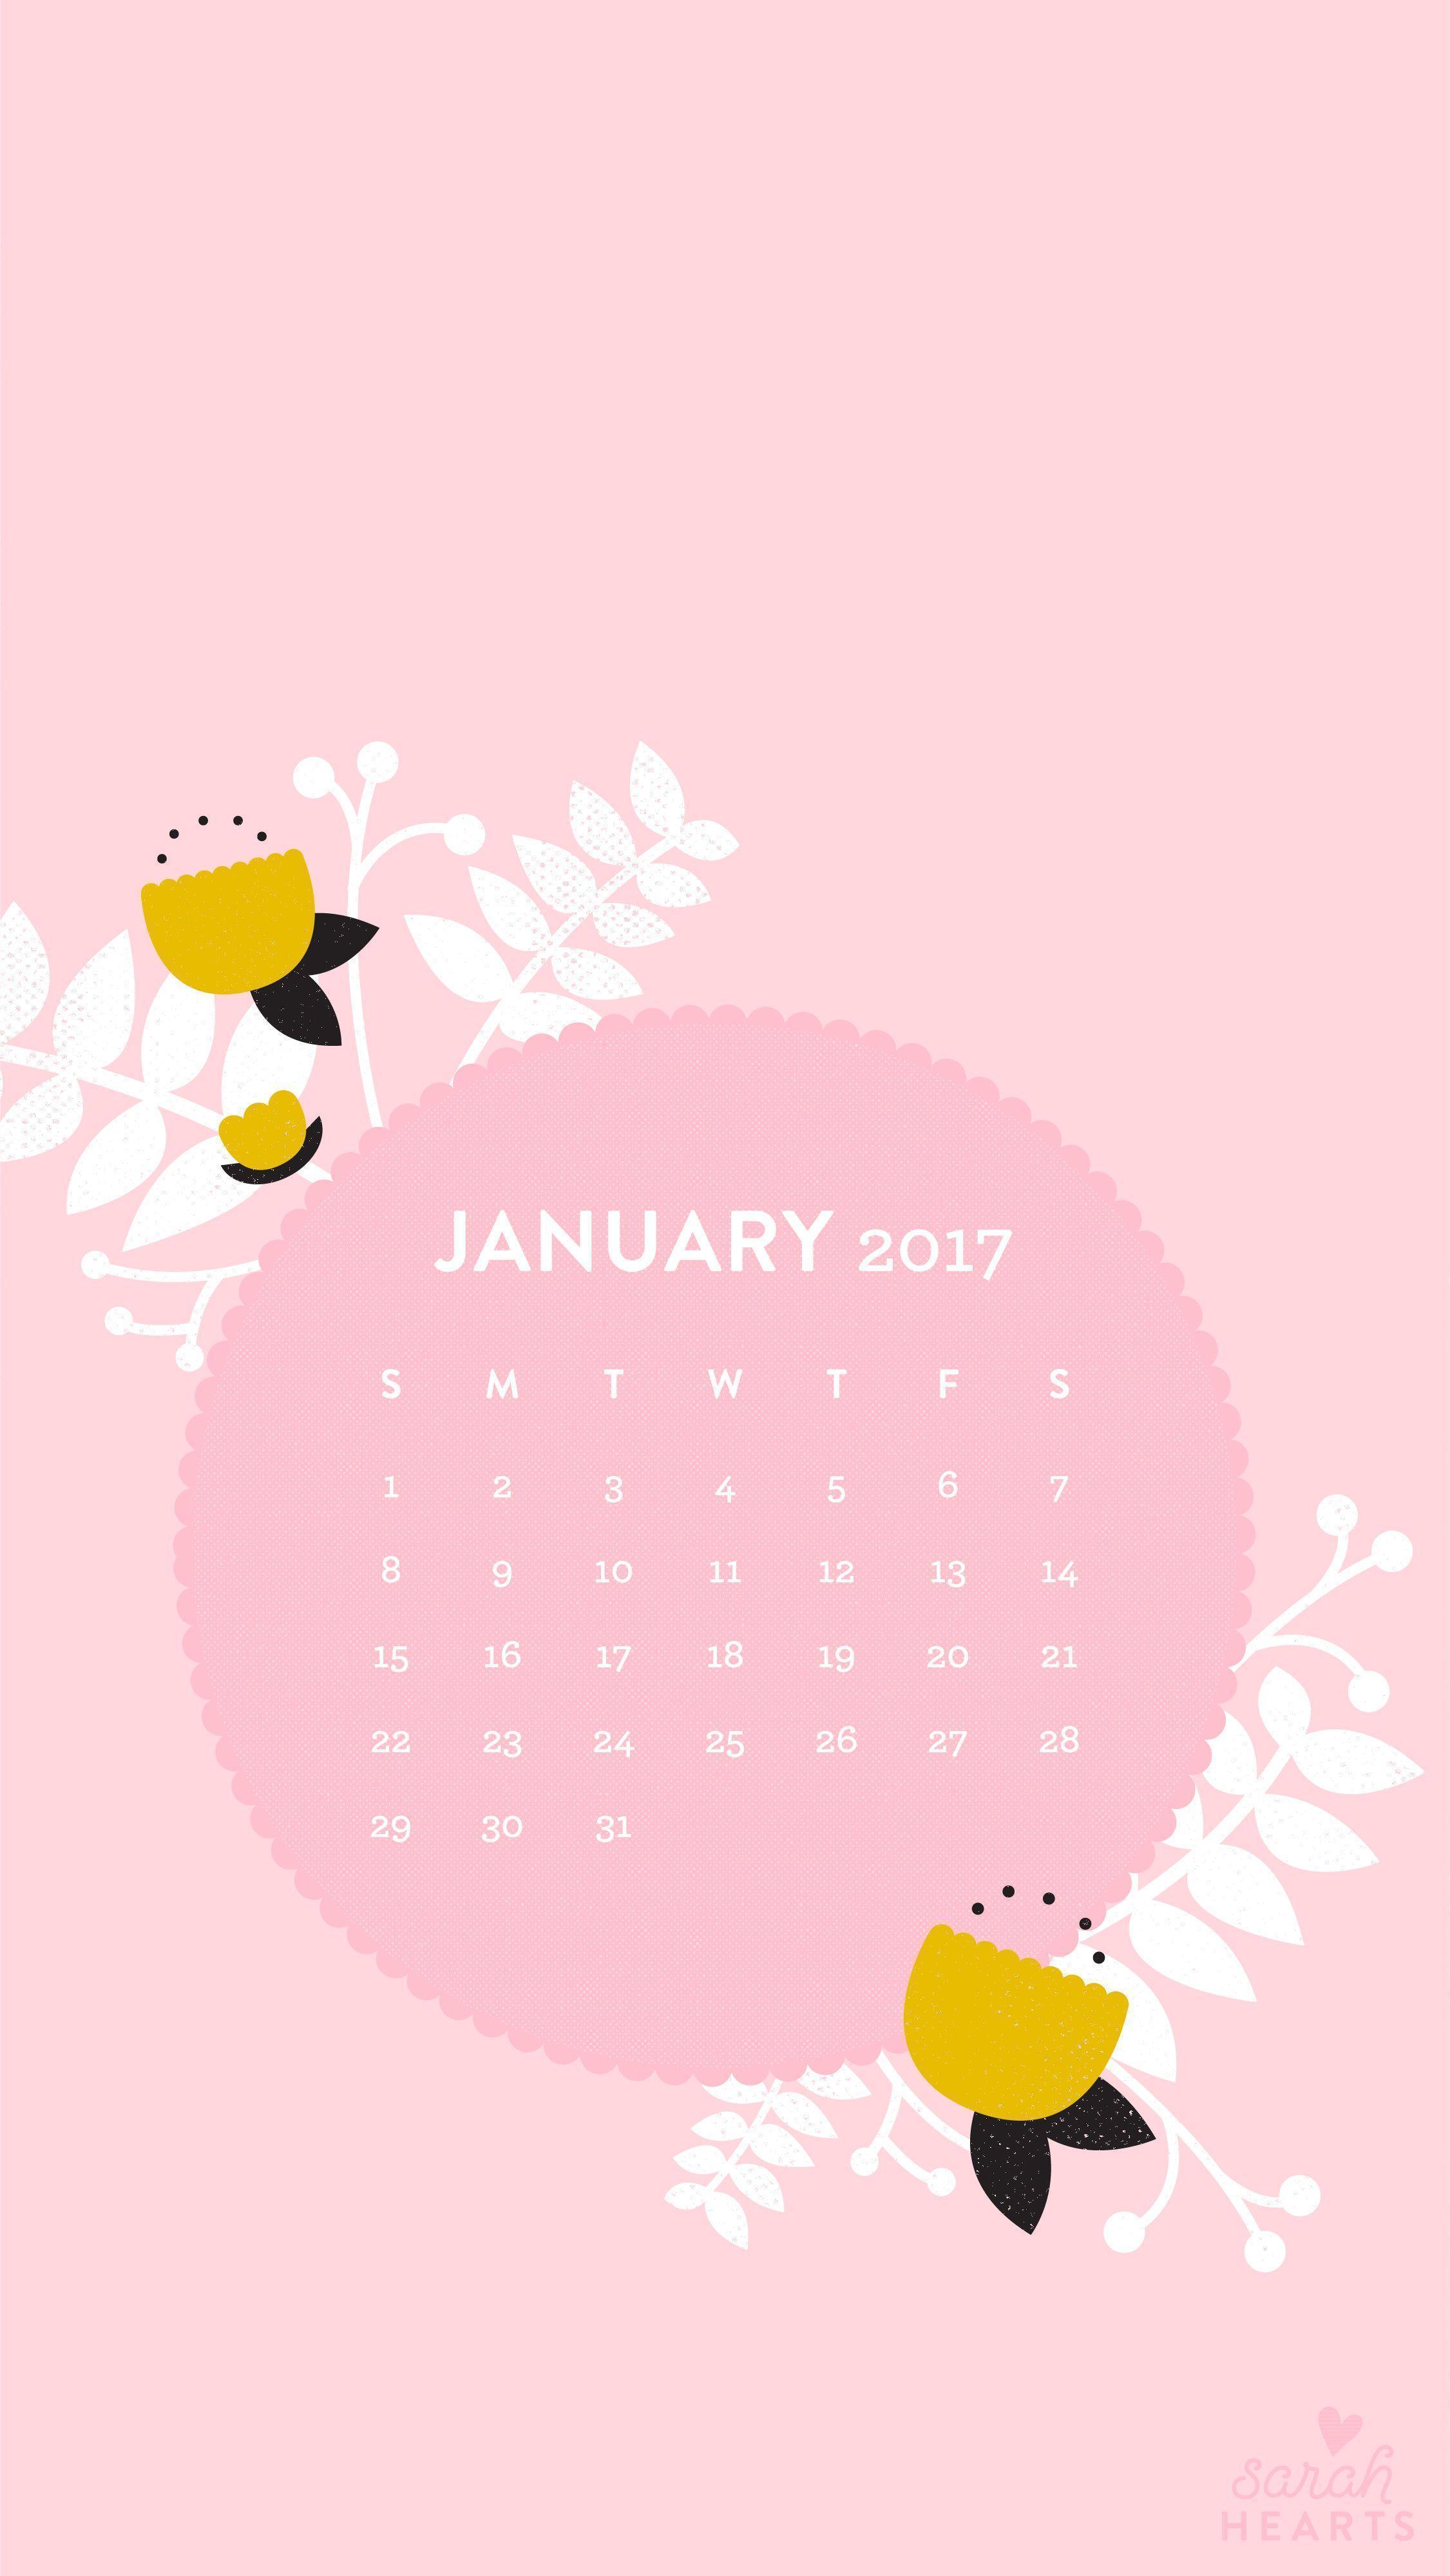 January 2017 Calendar Wallpaper